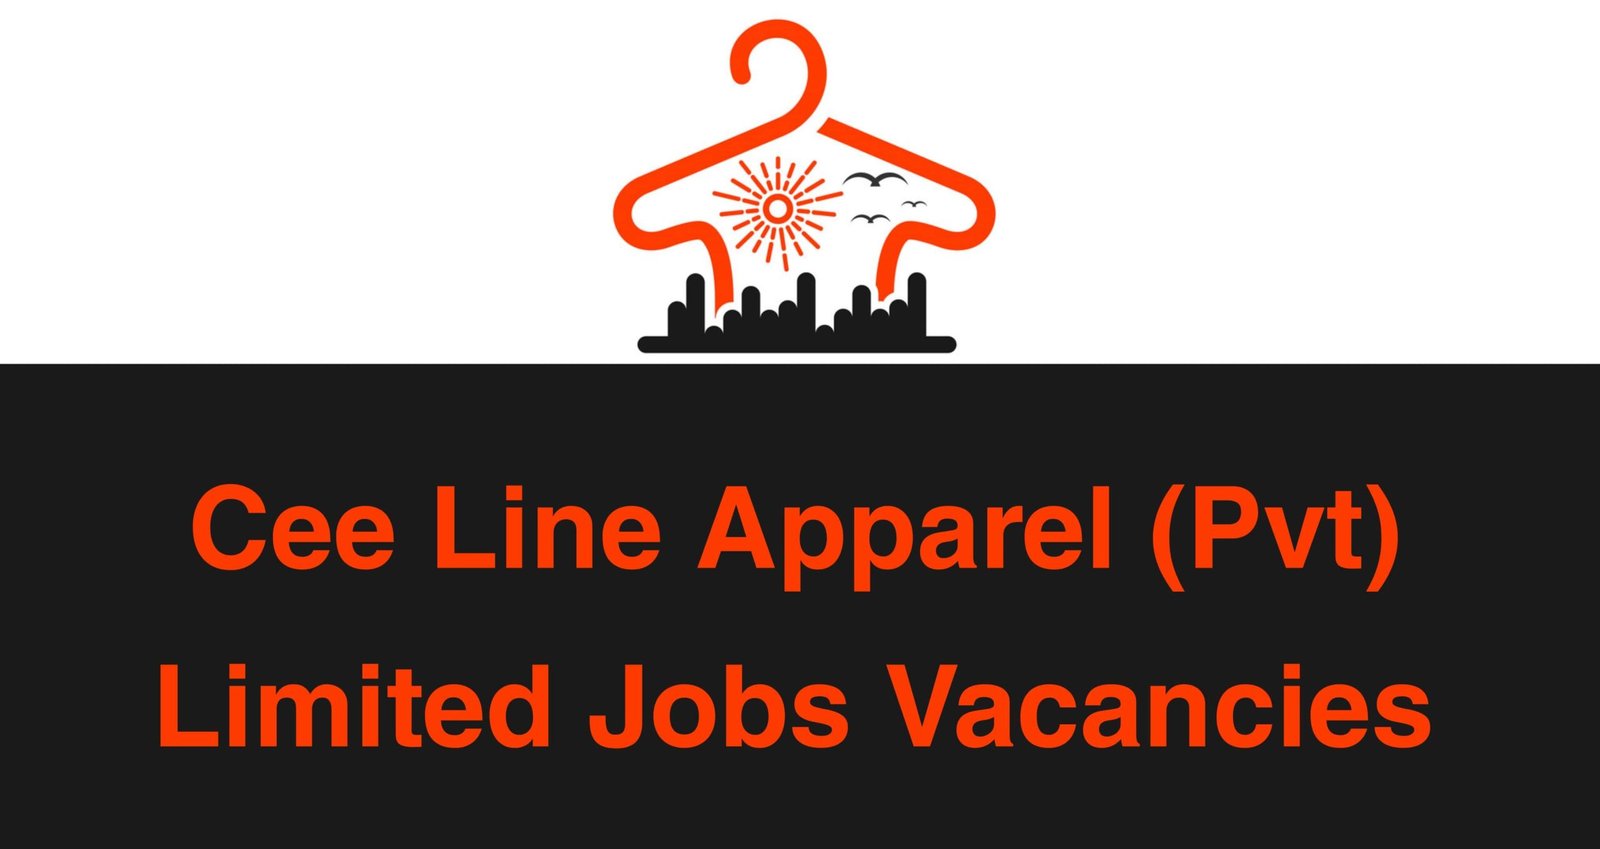 Cee Line Apparel (Pvt) Limited Jobs Vacancies